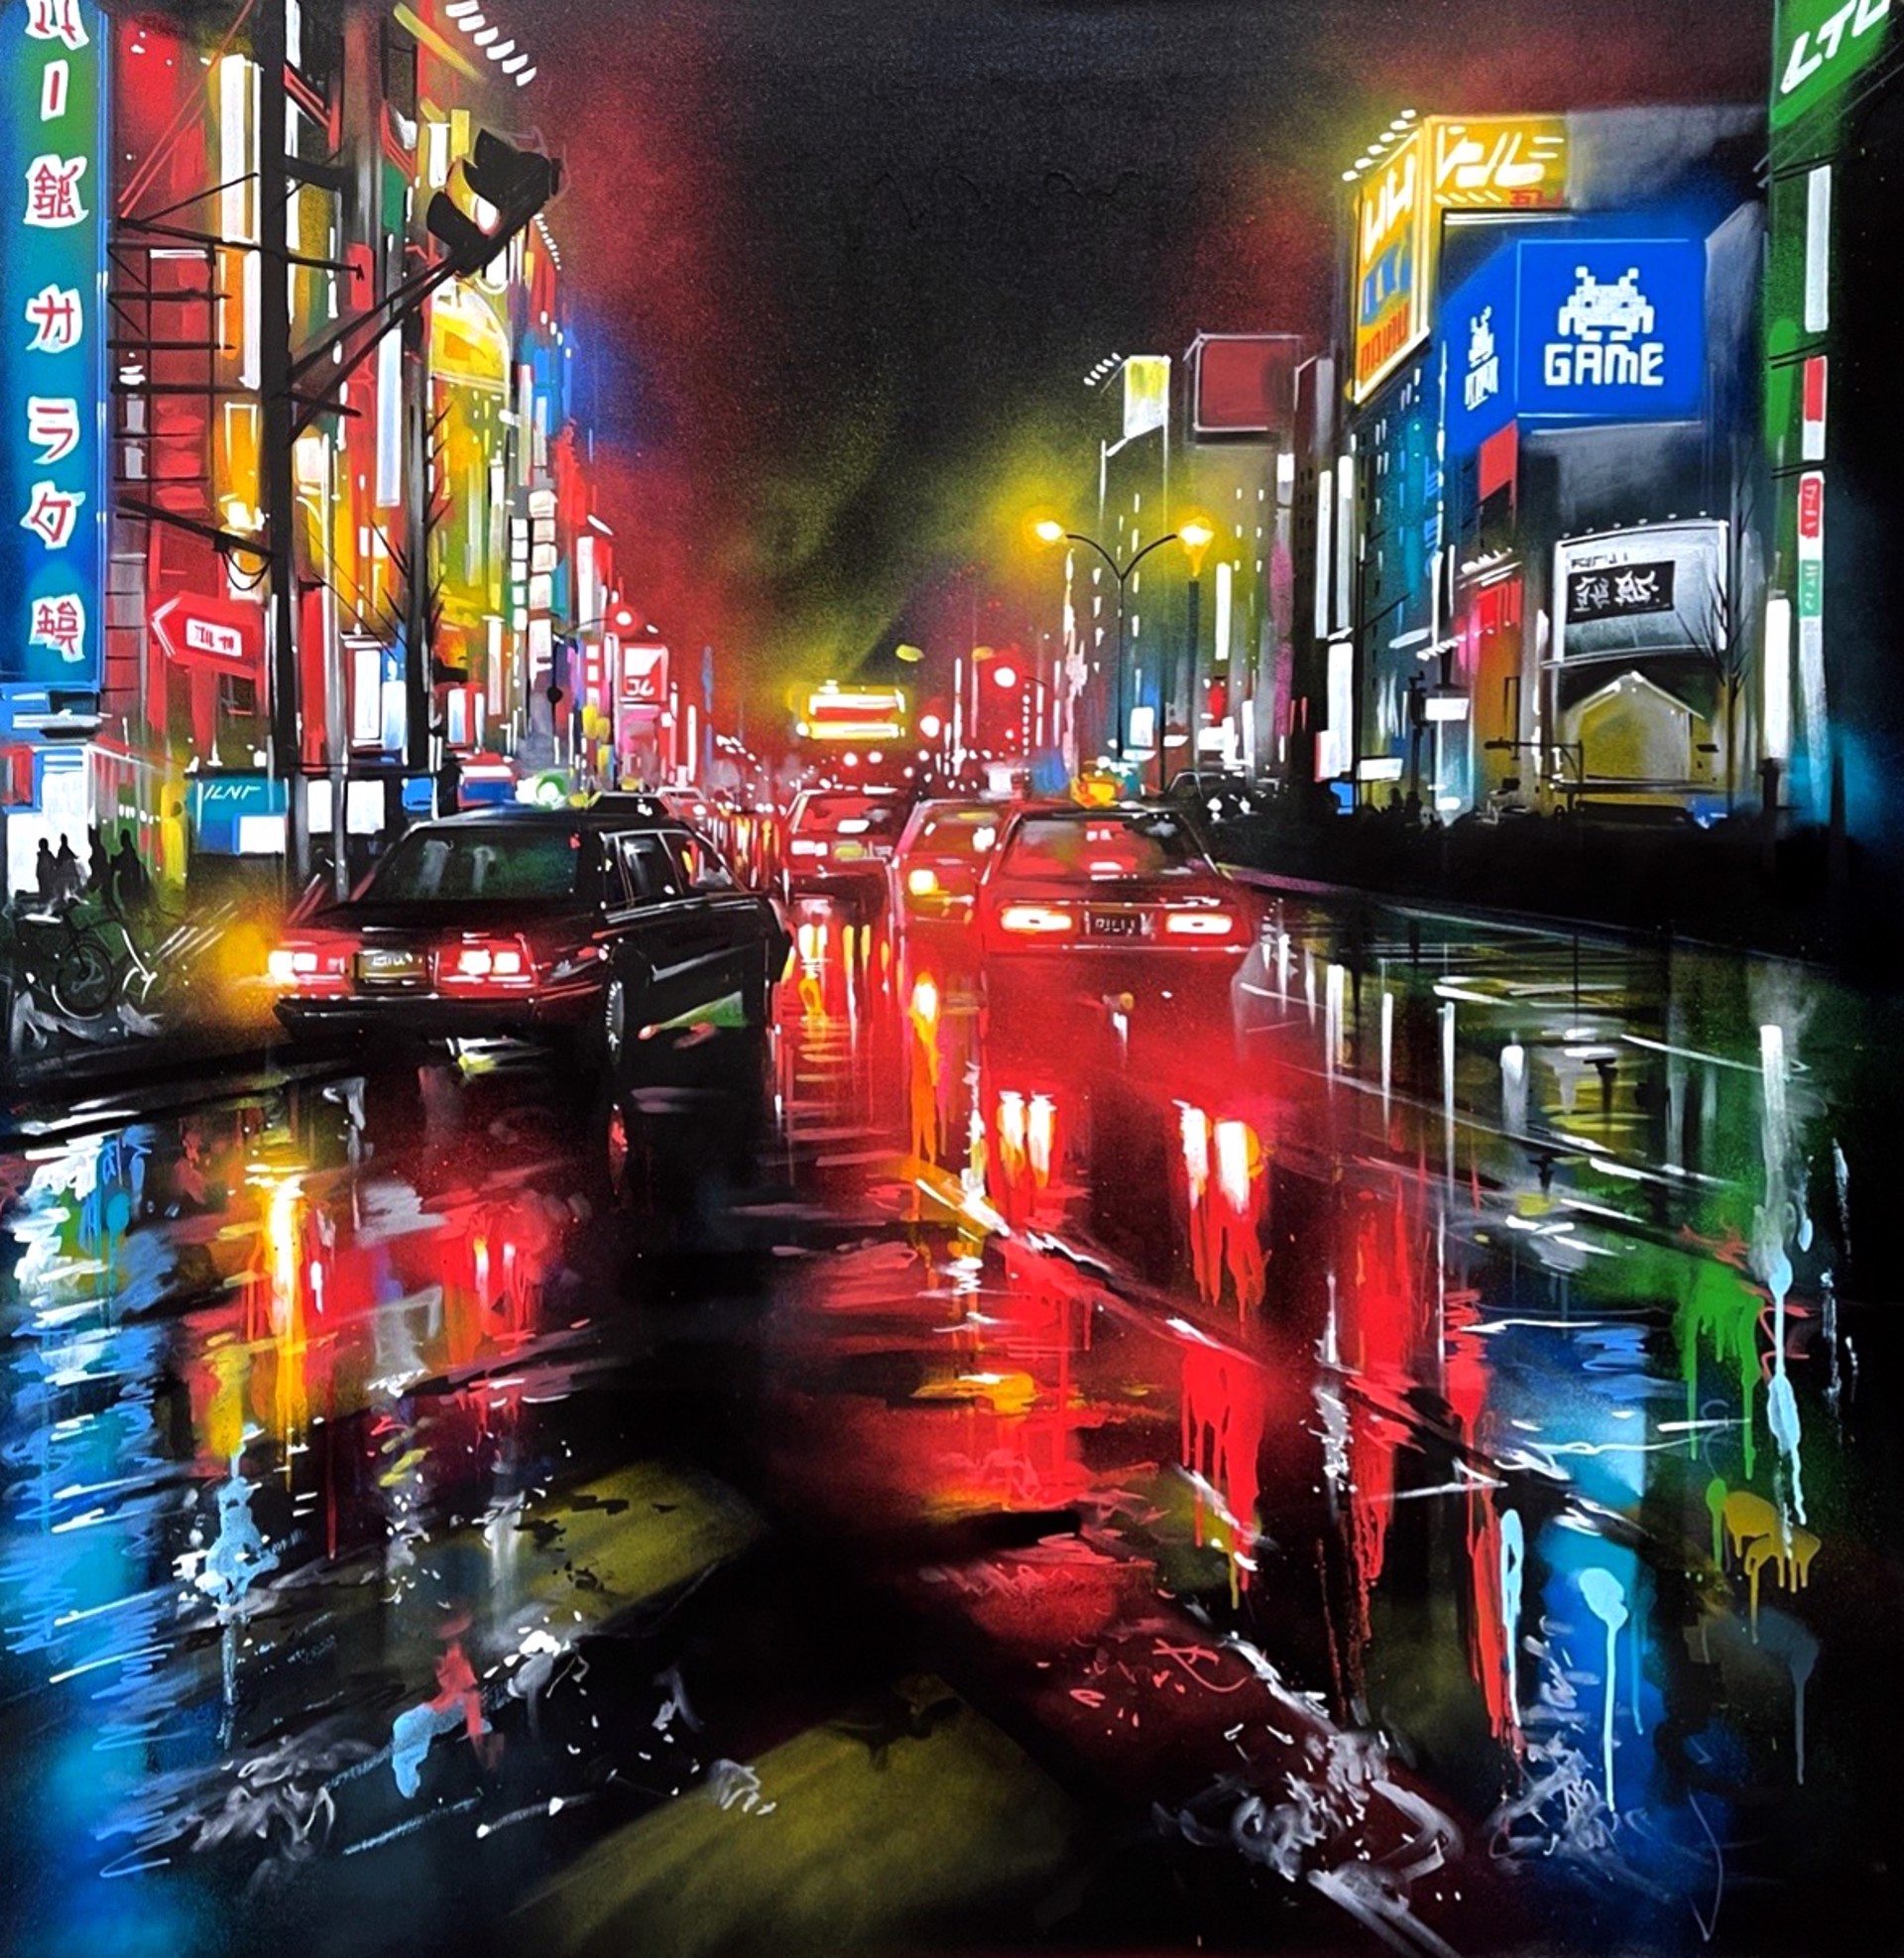 Neon Streets by Dan Kitchener